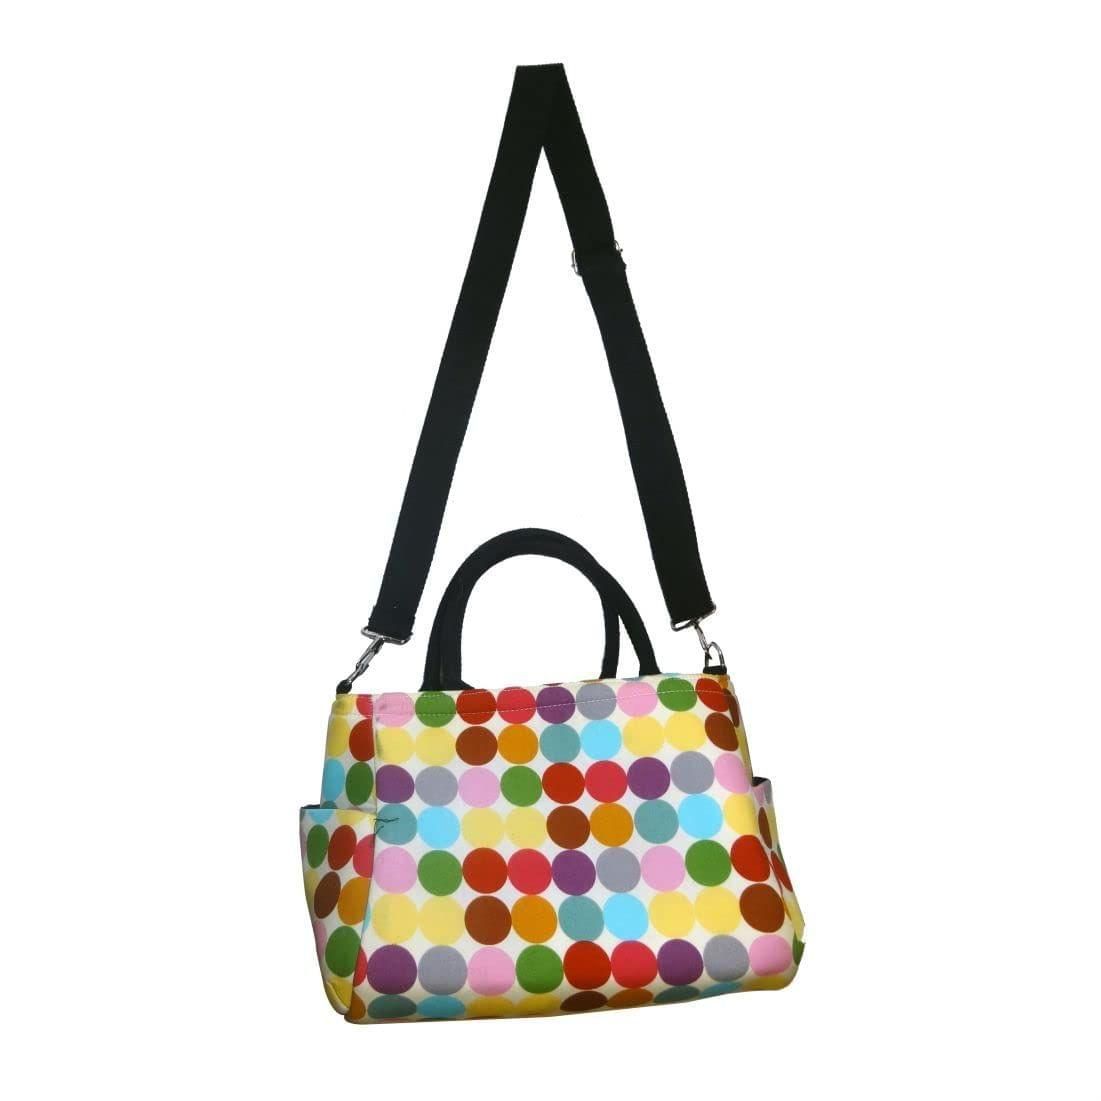 THE ALLCHEMY colorful hand bag, Colorful sling bag, Fashionable hand bag